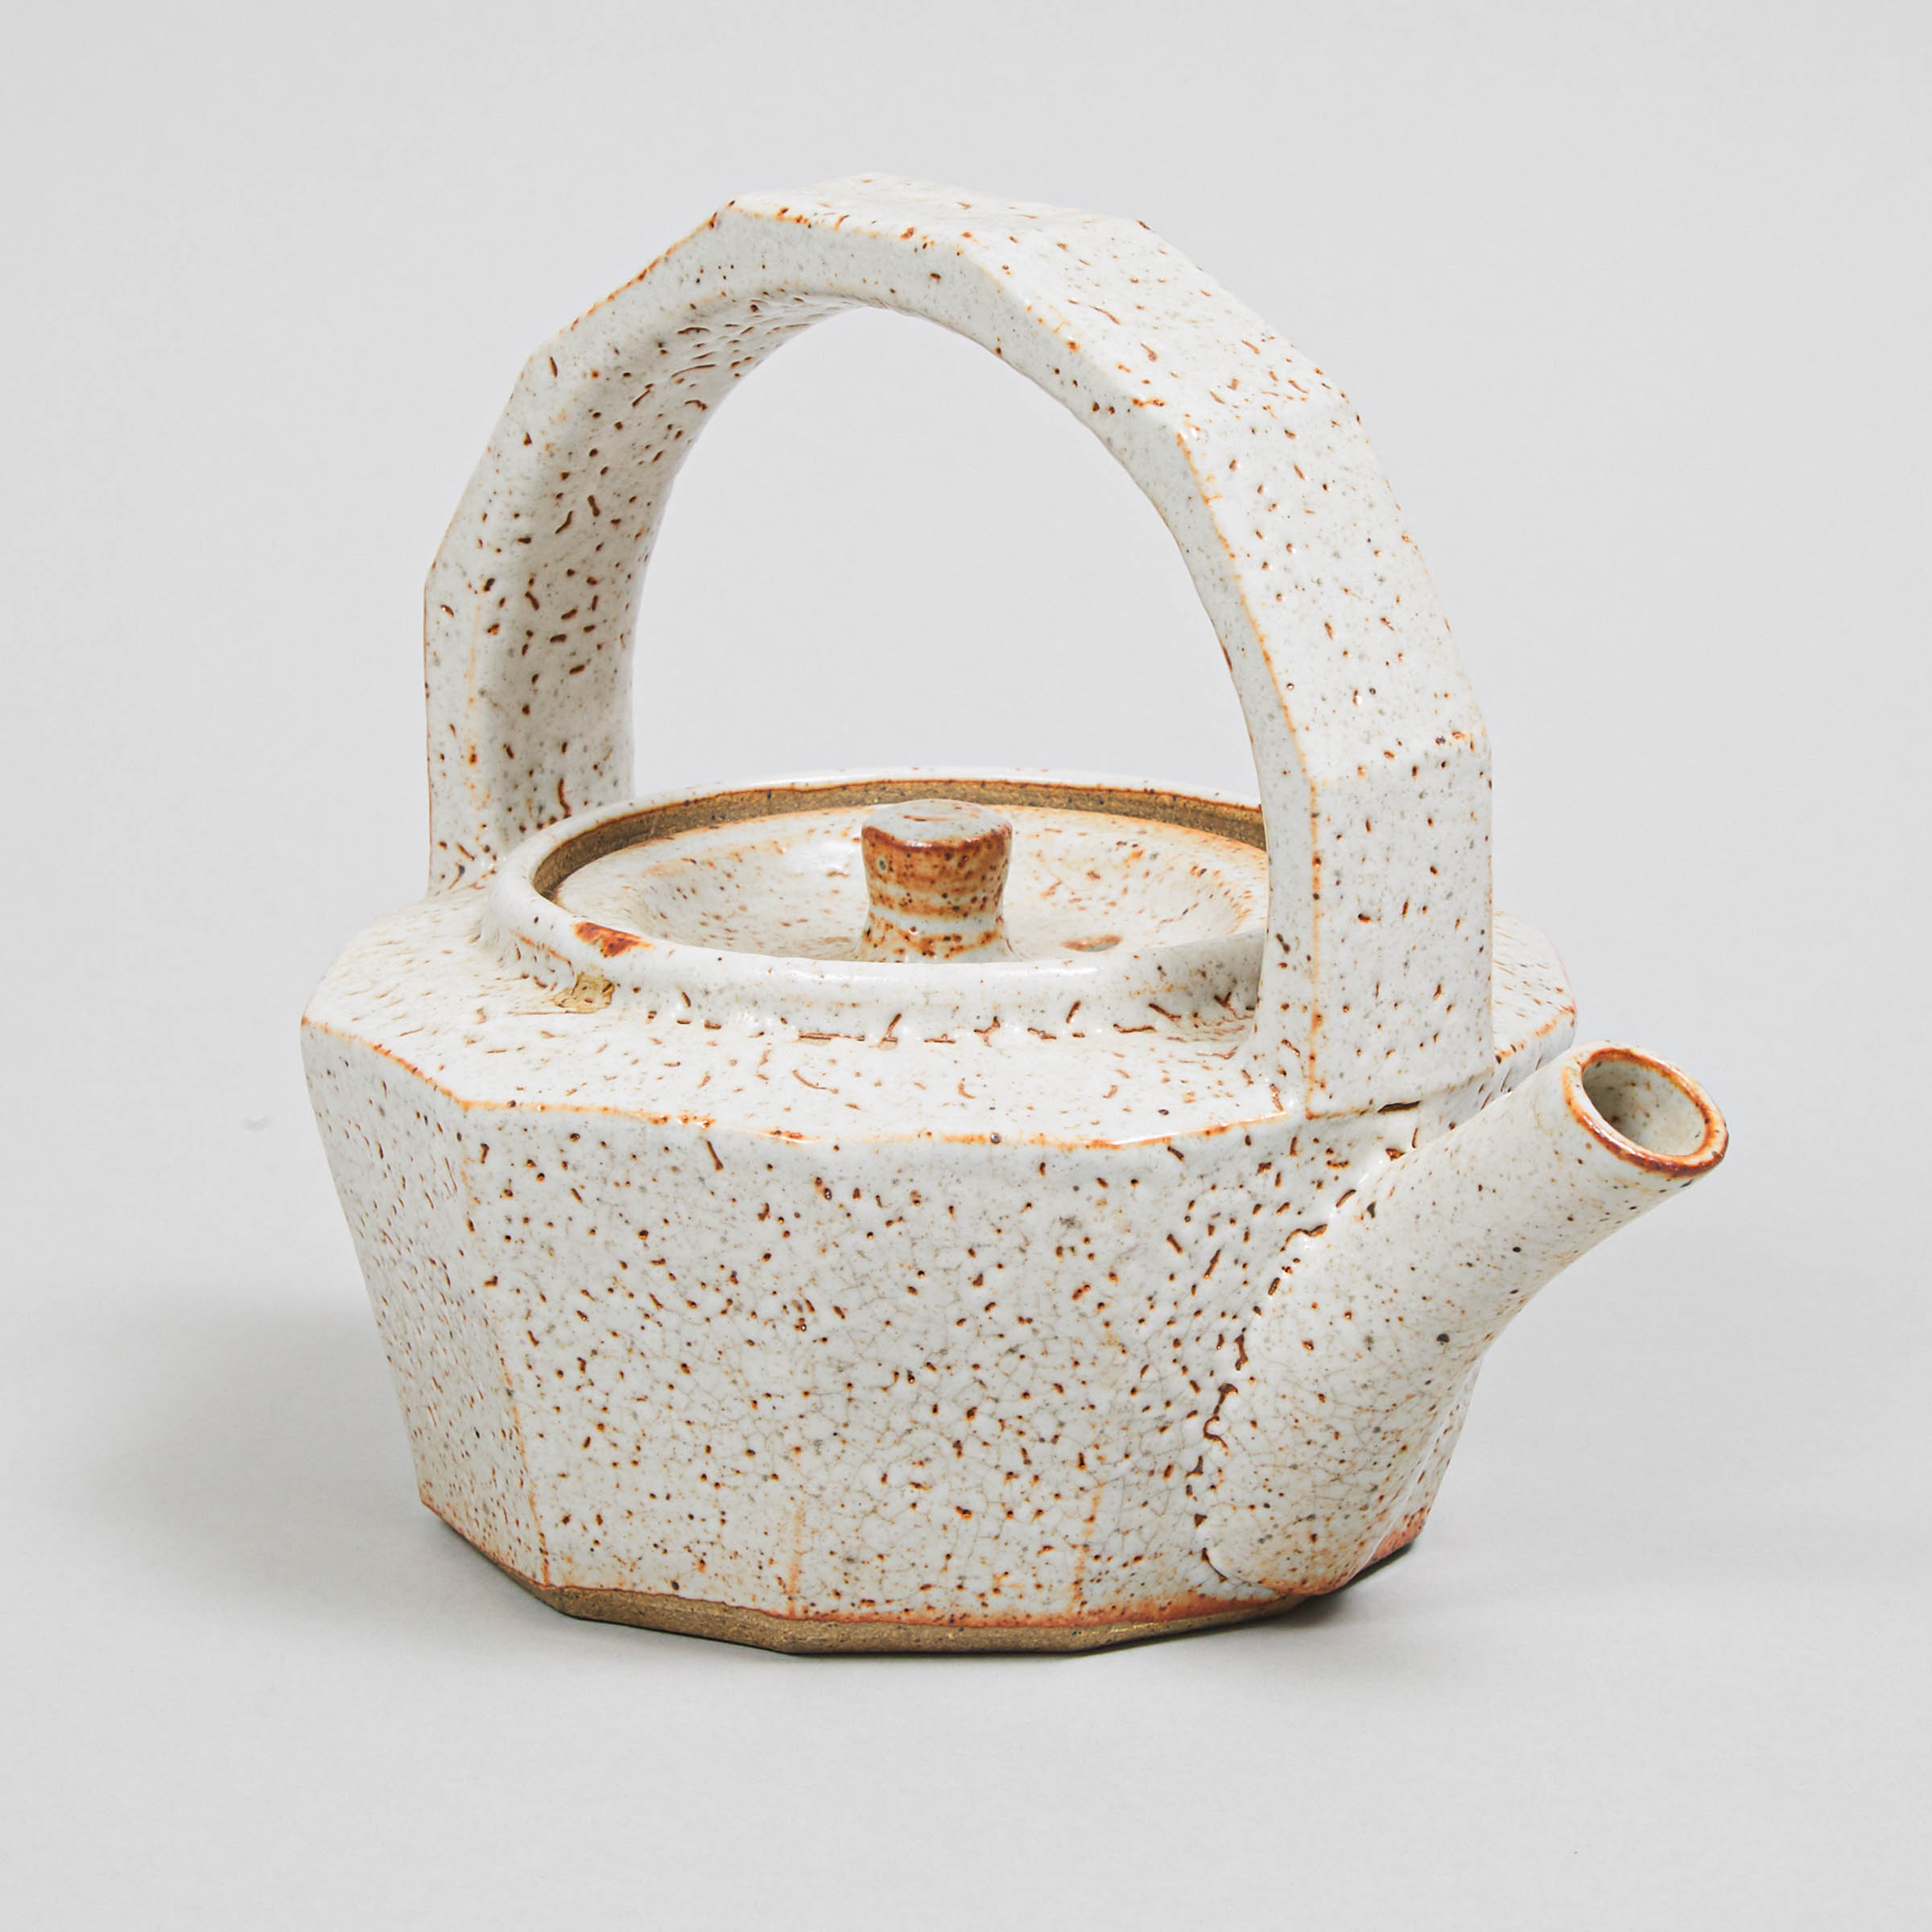 Lari Robson (Canadian, 1942-2012), Glazed Stoneware Teapot